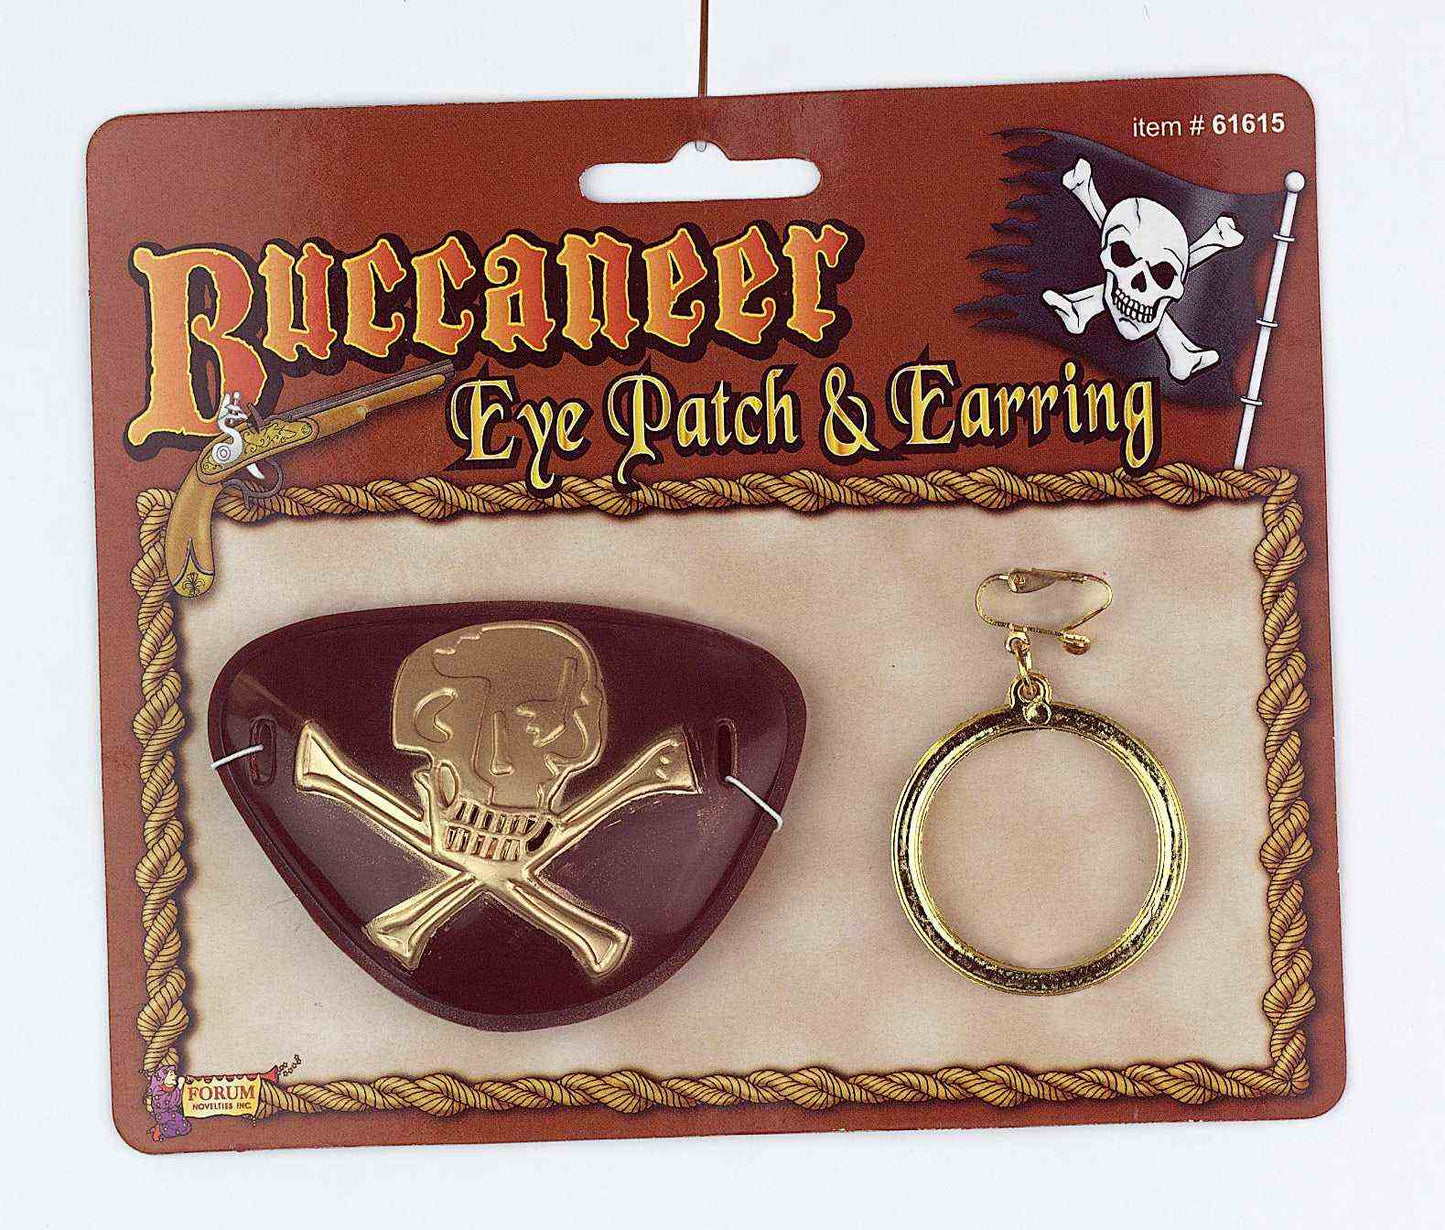 Bucaneer Eye Patch & Earring